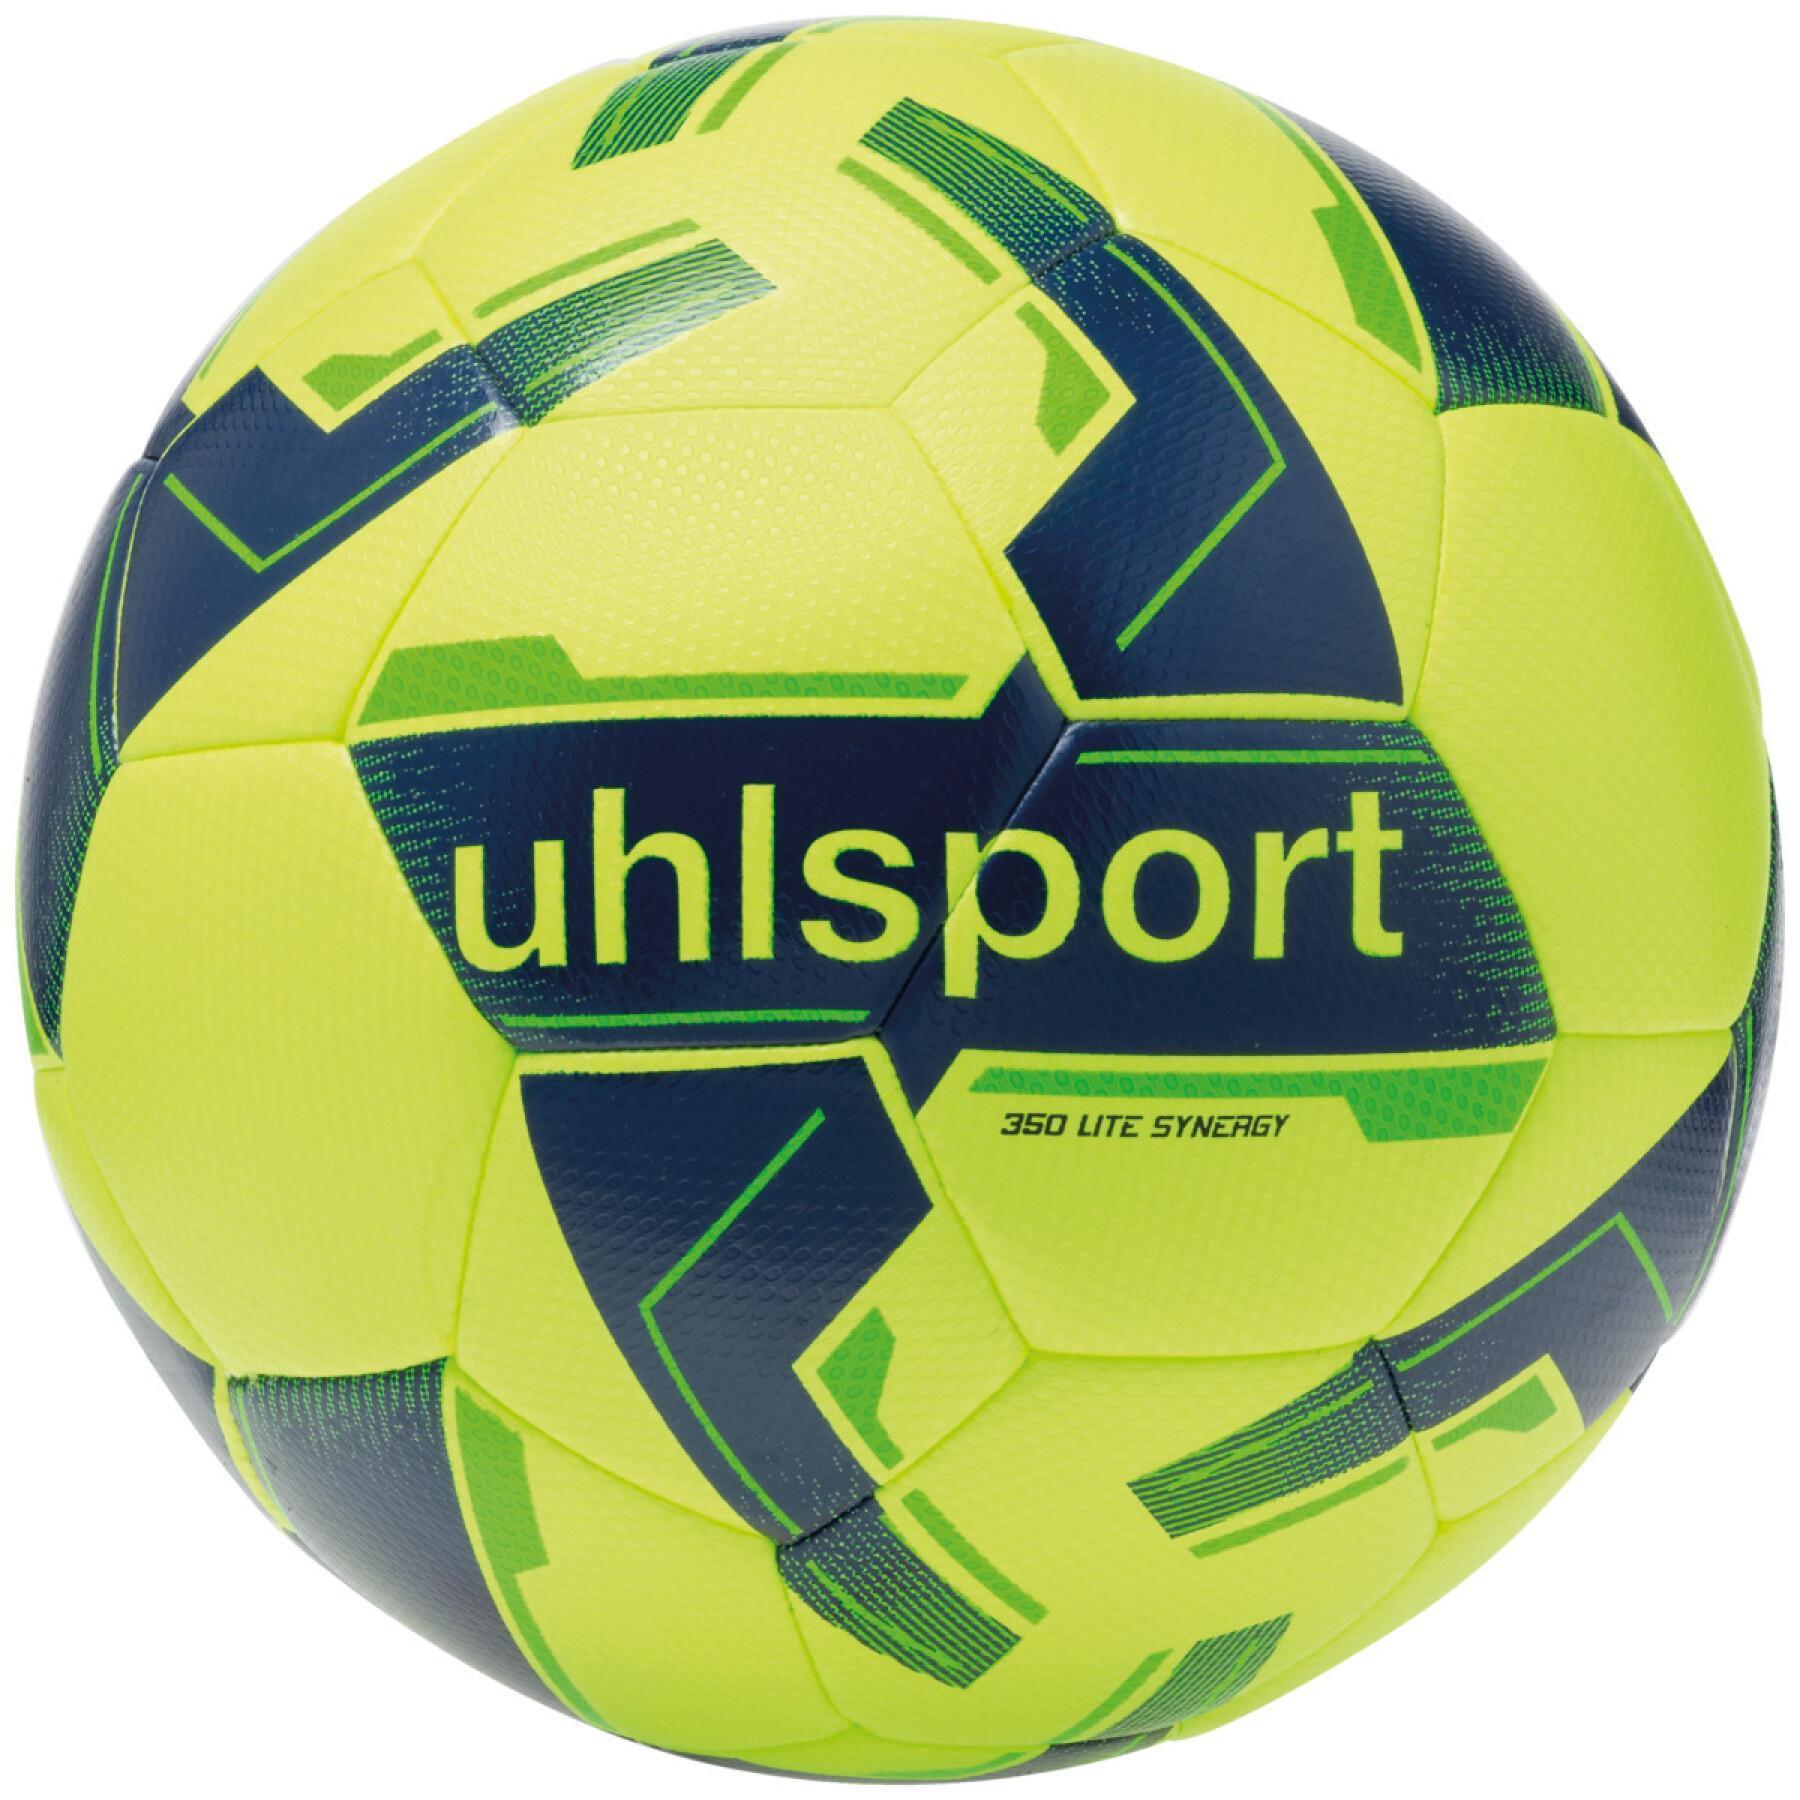 Voetbal kinderen Uhlsport 350 Lite Synergy